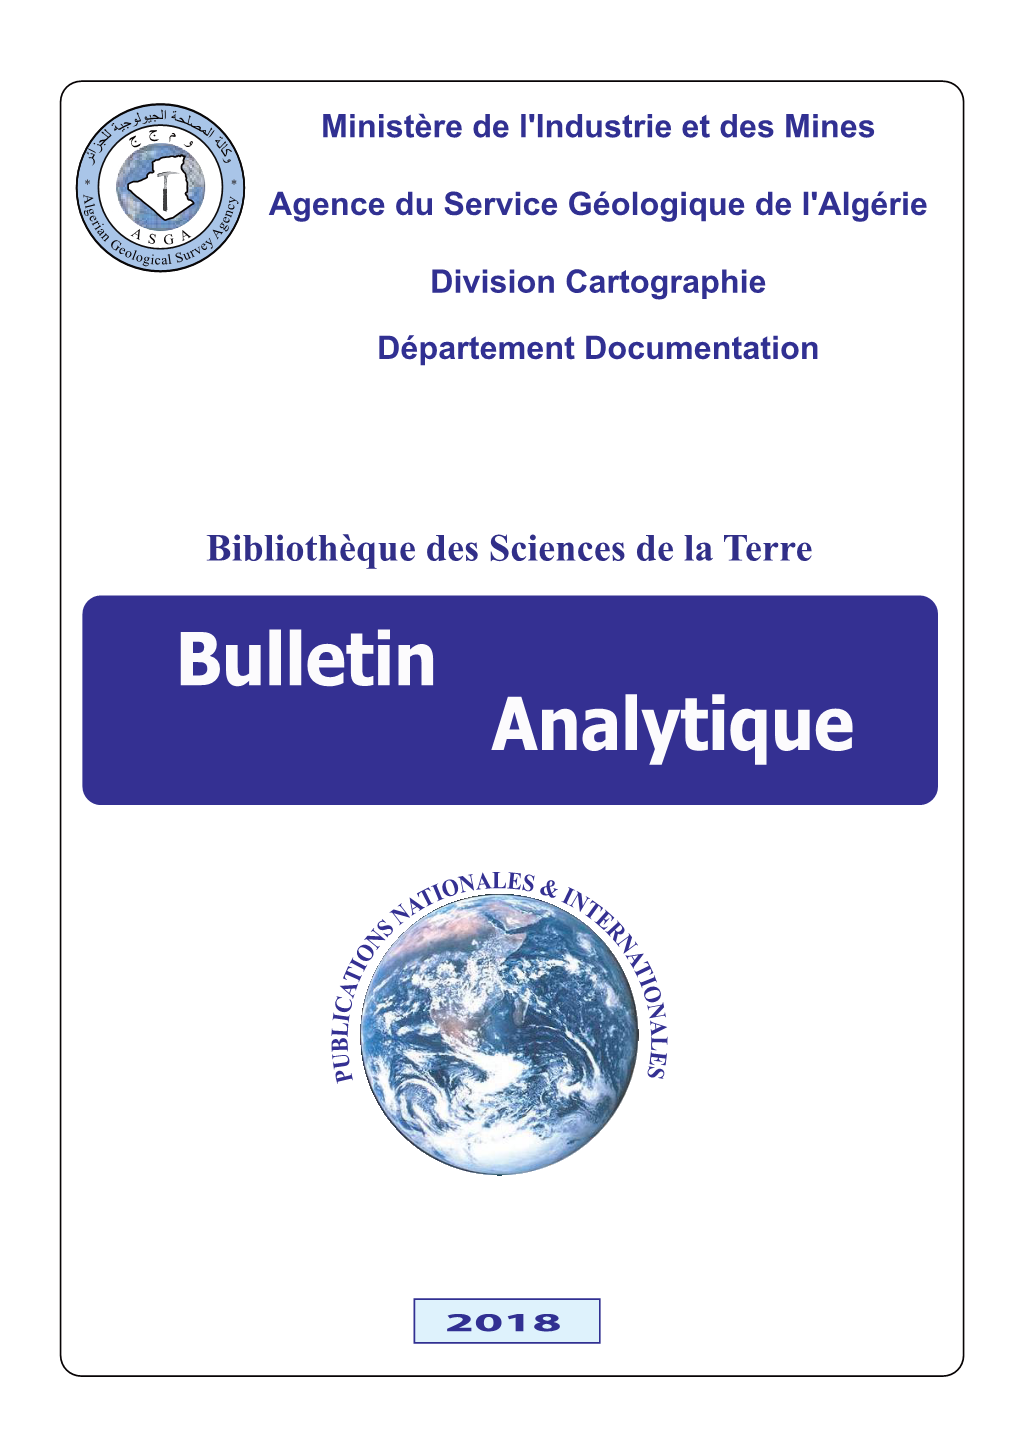 Bulletin Analytique